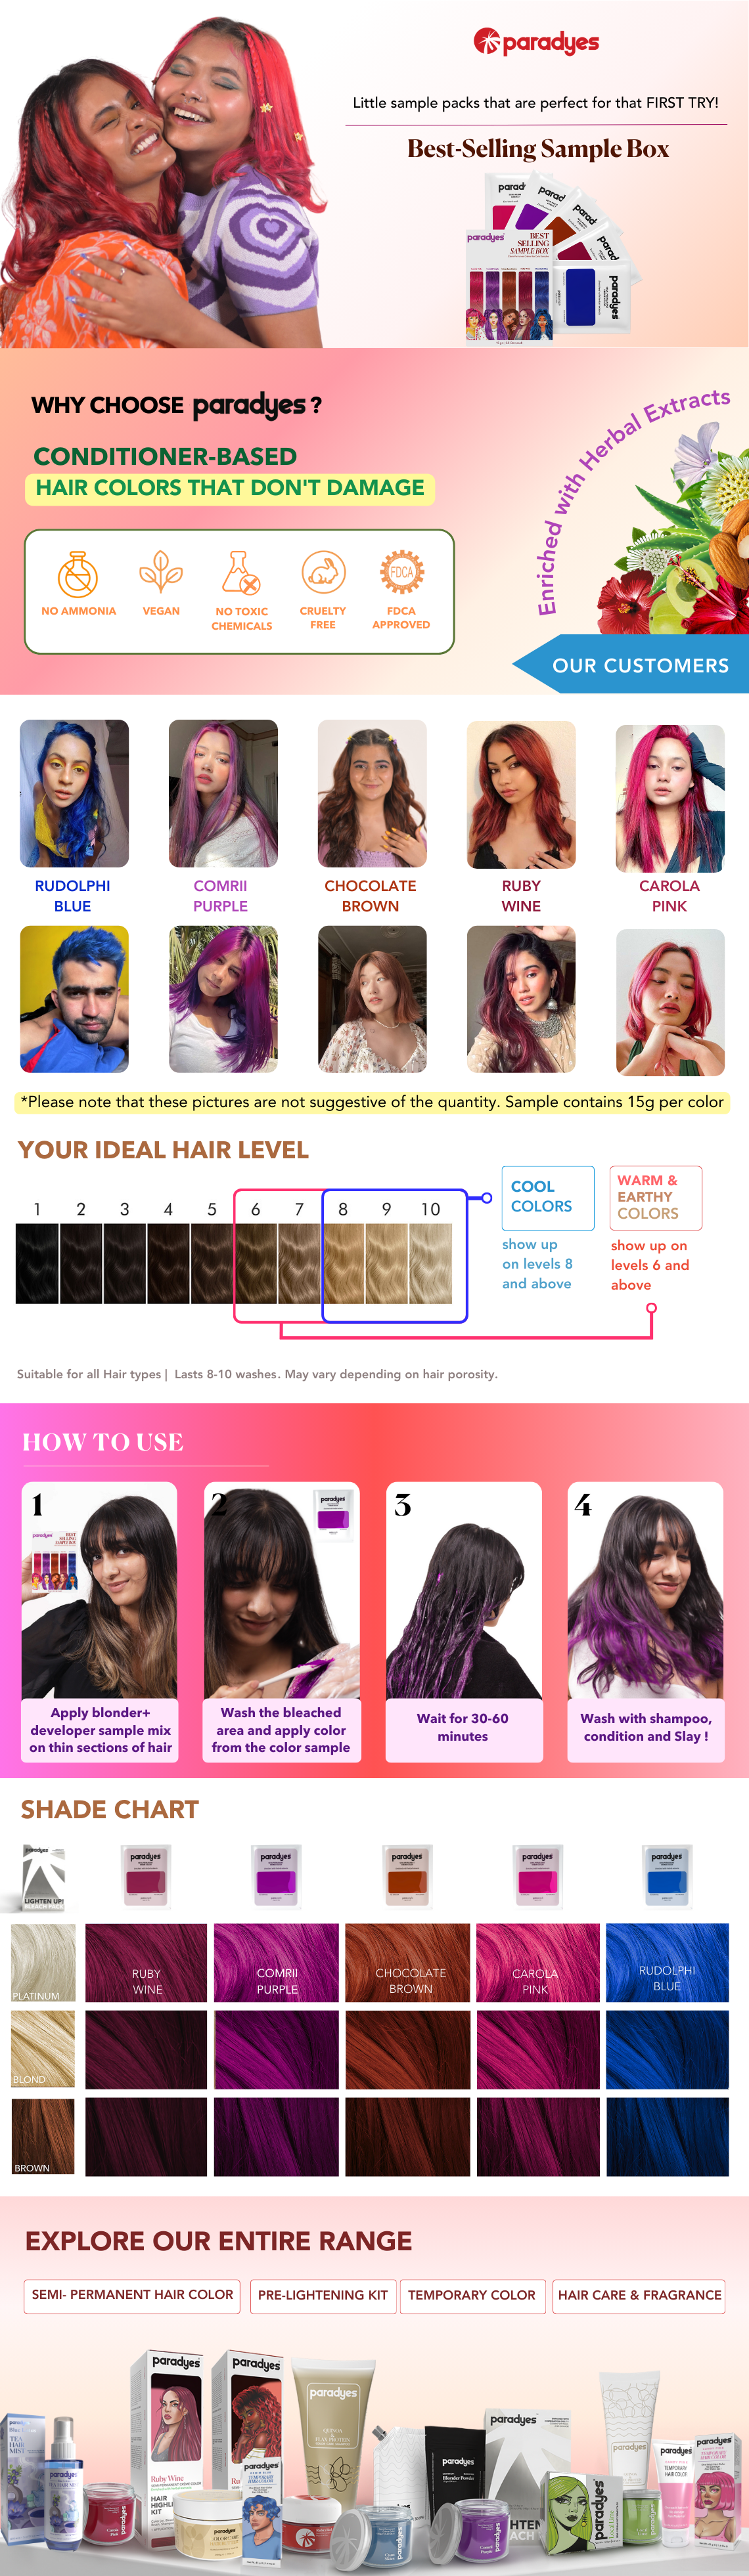 Cool Hair Color Sample Box